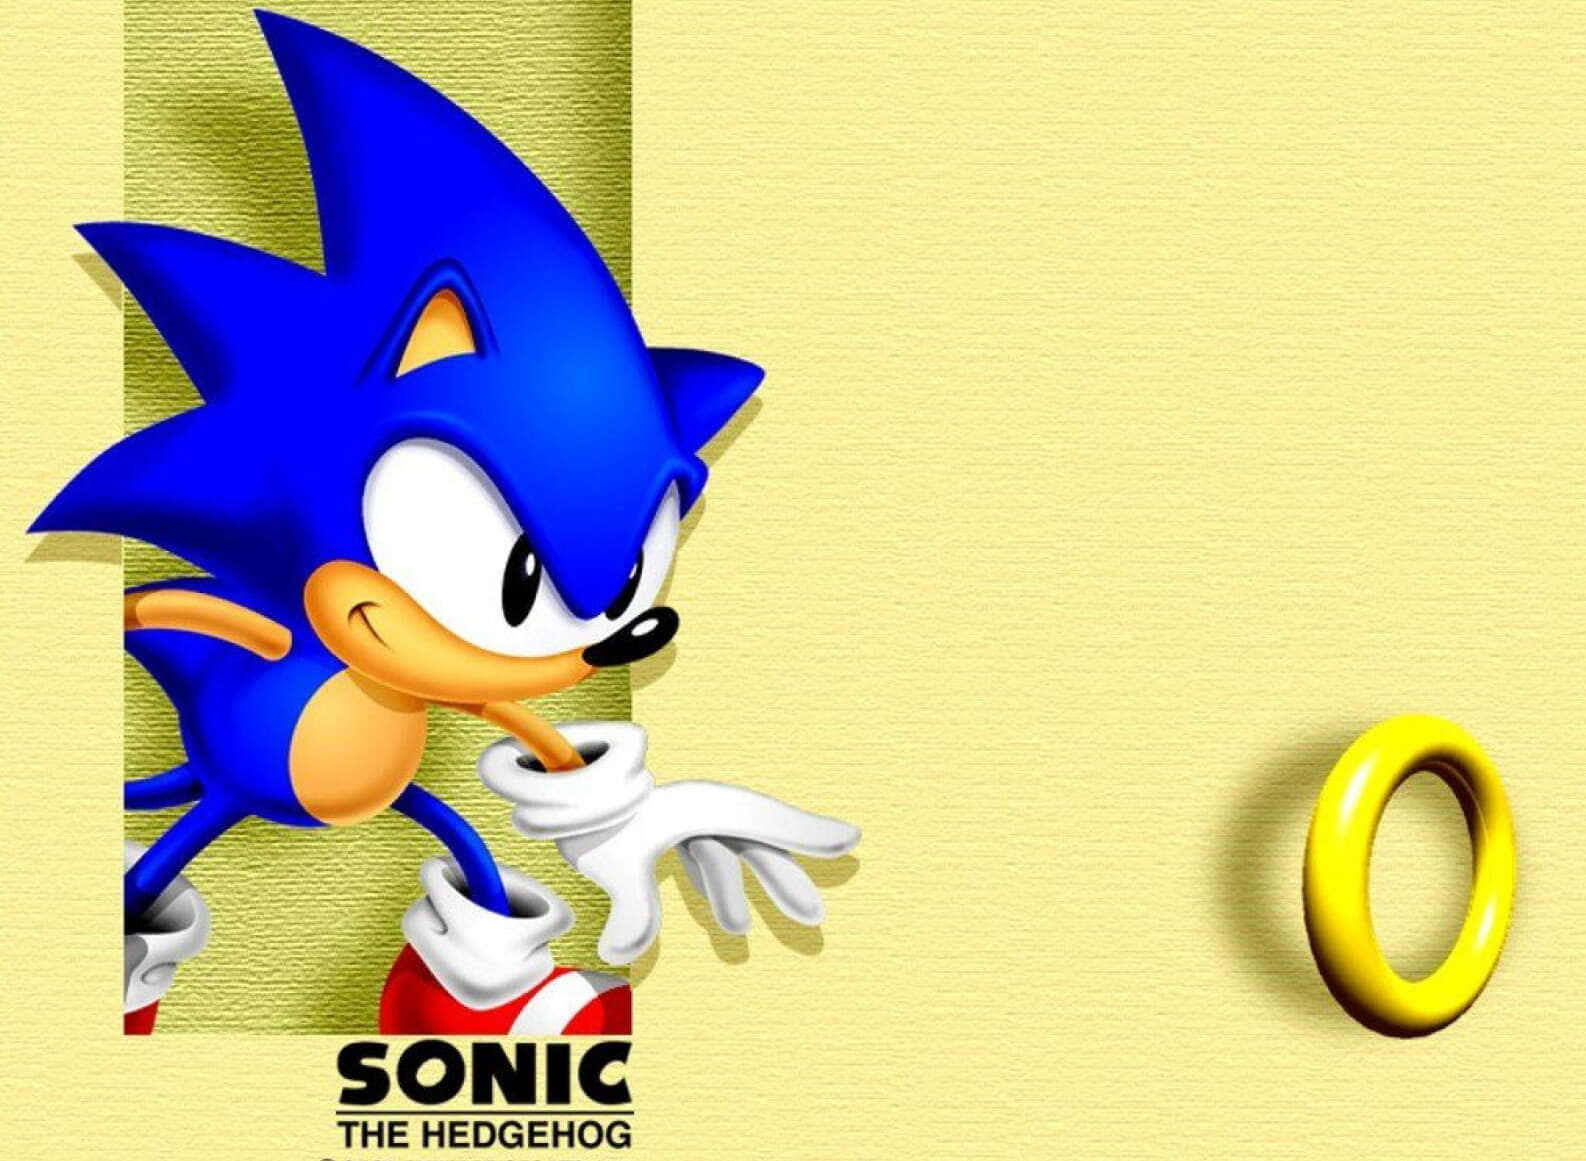 Sonicbakgrundsbild.